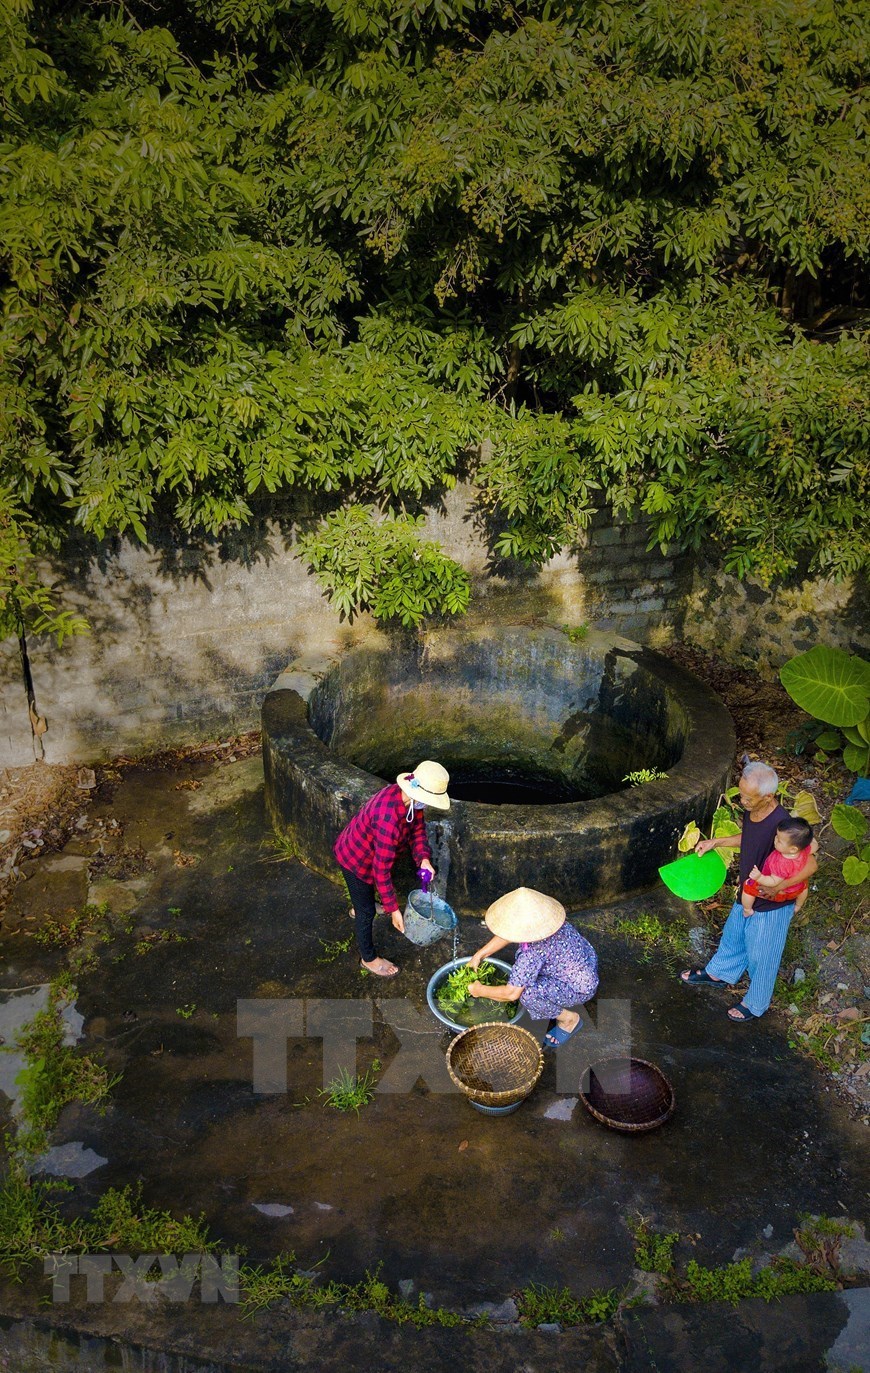 Village well in Vietnamese people's life